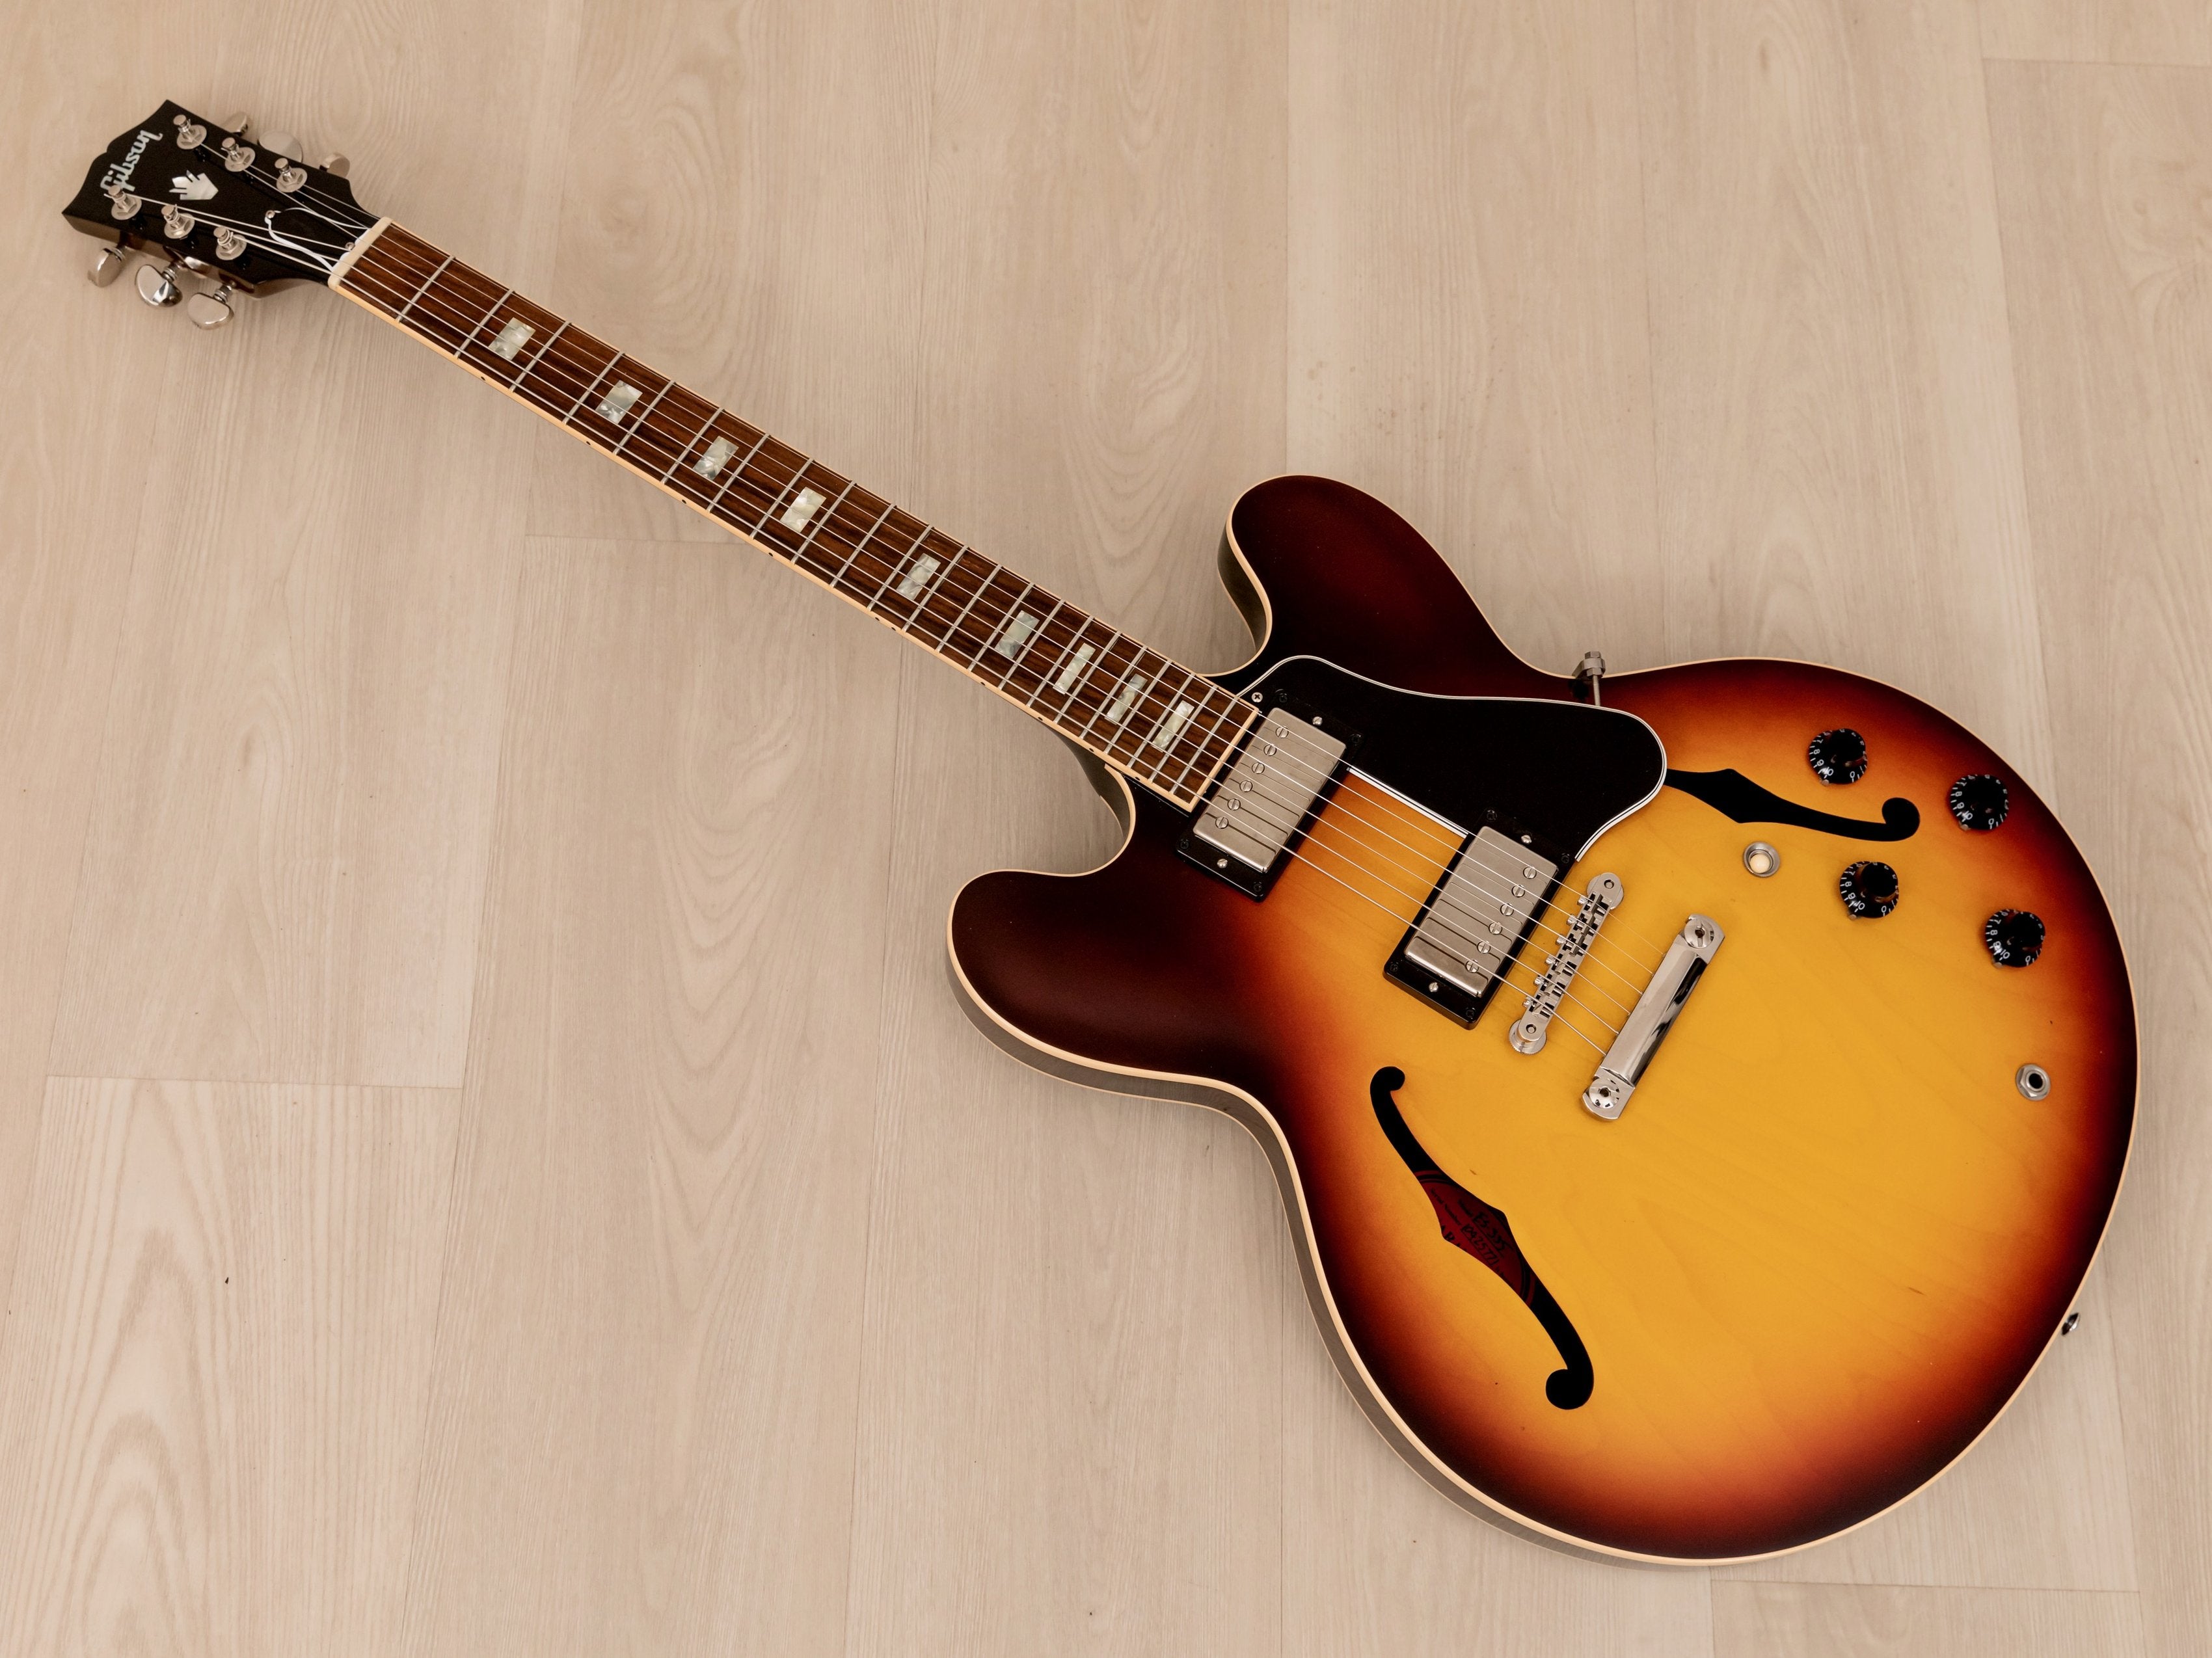 2015 Gibson Memphis ES-335 Block Sunburst Gloss, Near-Mint w/ Burstbucker PAFs, COA, Case